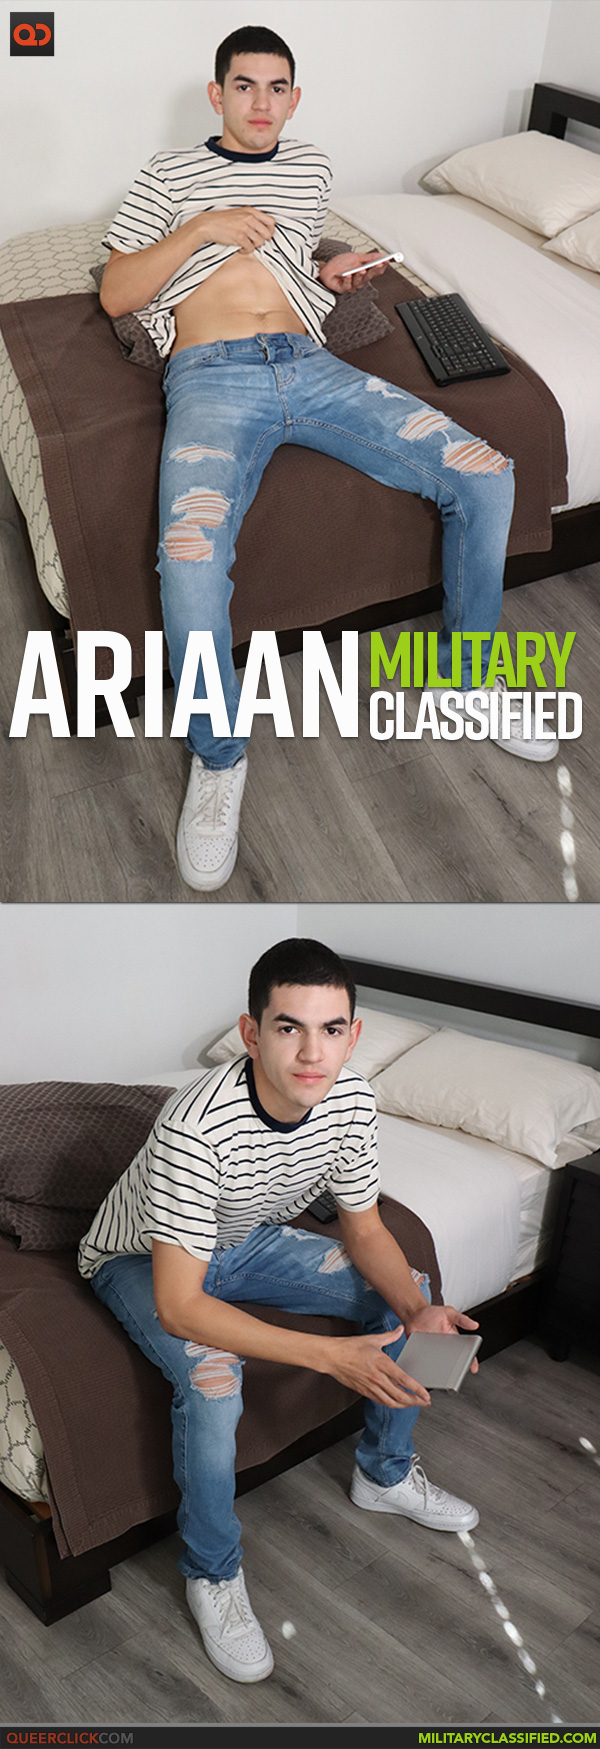 Military Classified: Ariaan